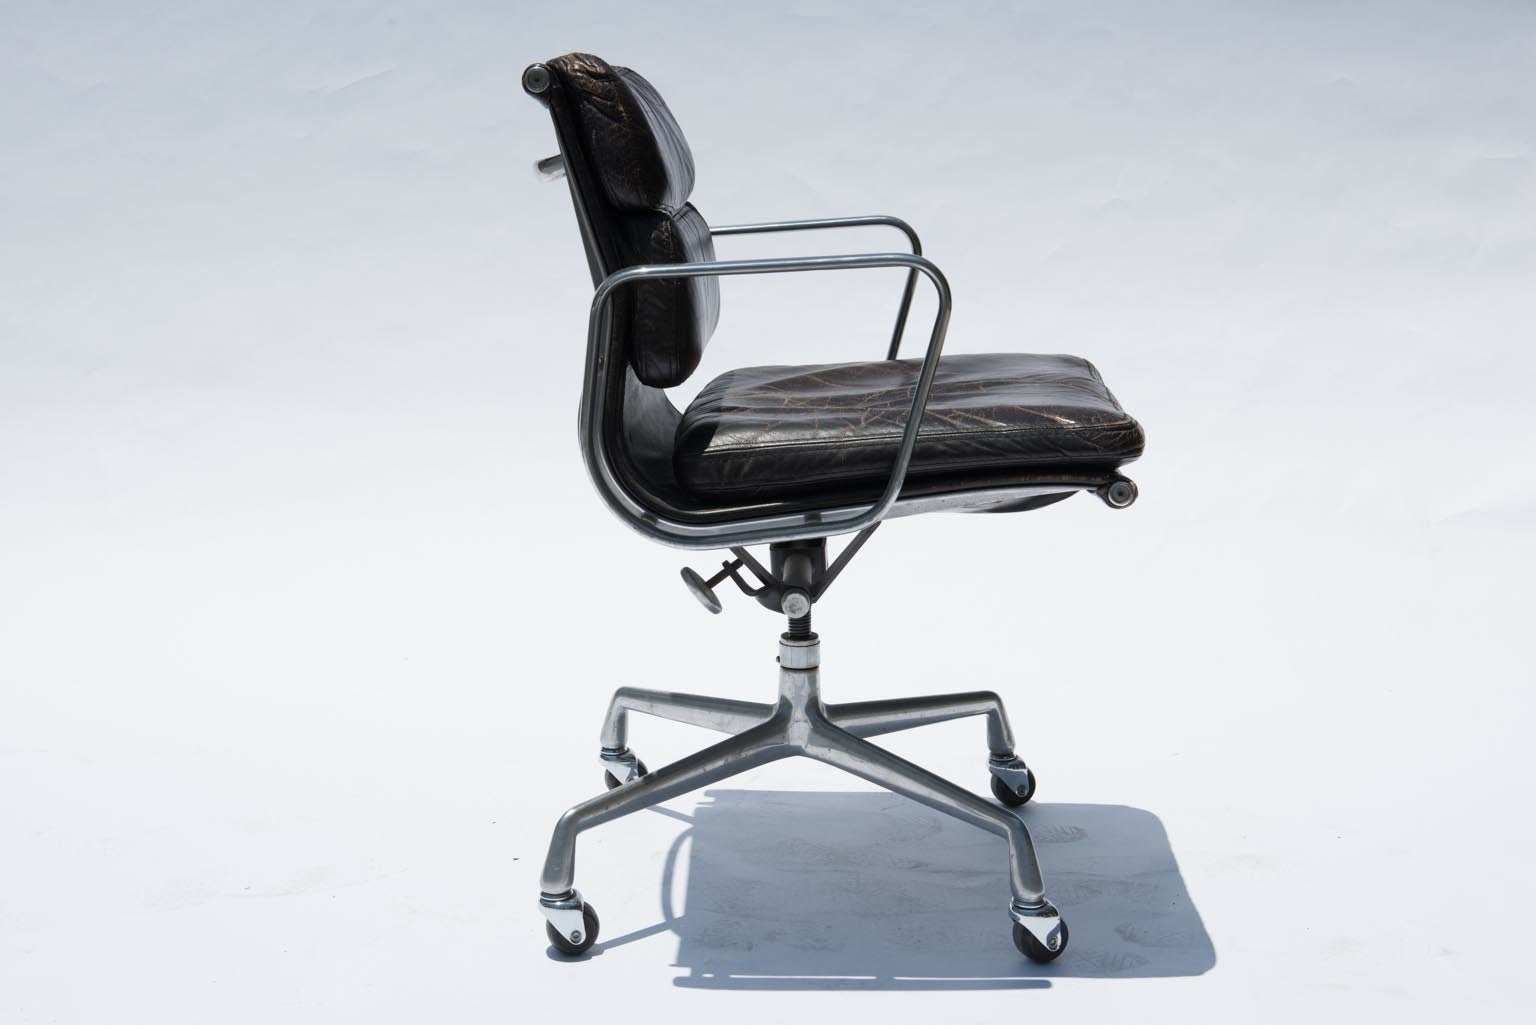 Charles Eames Desk Chair